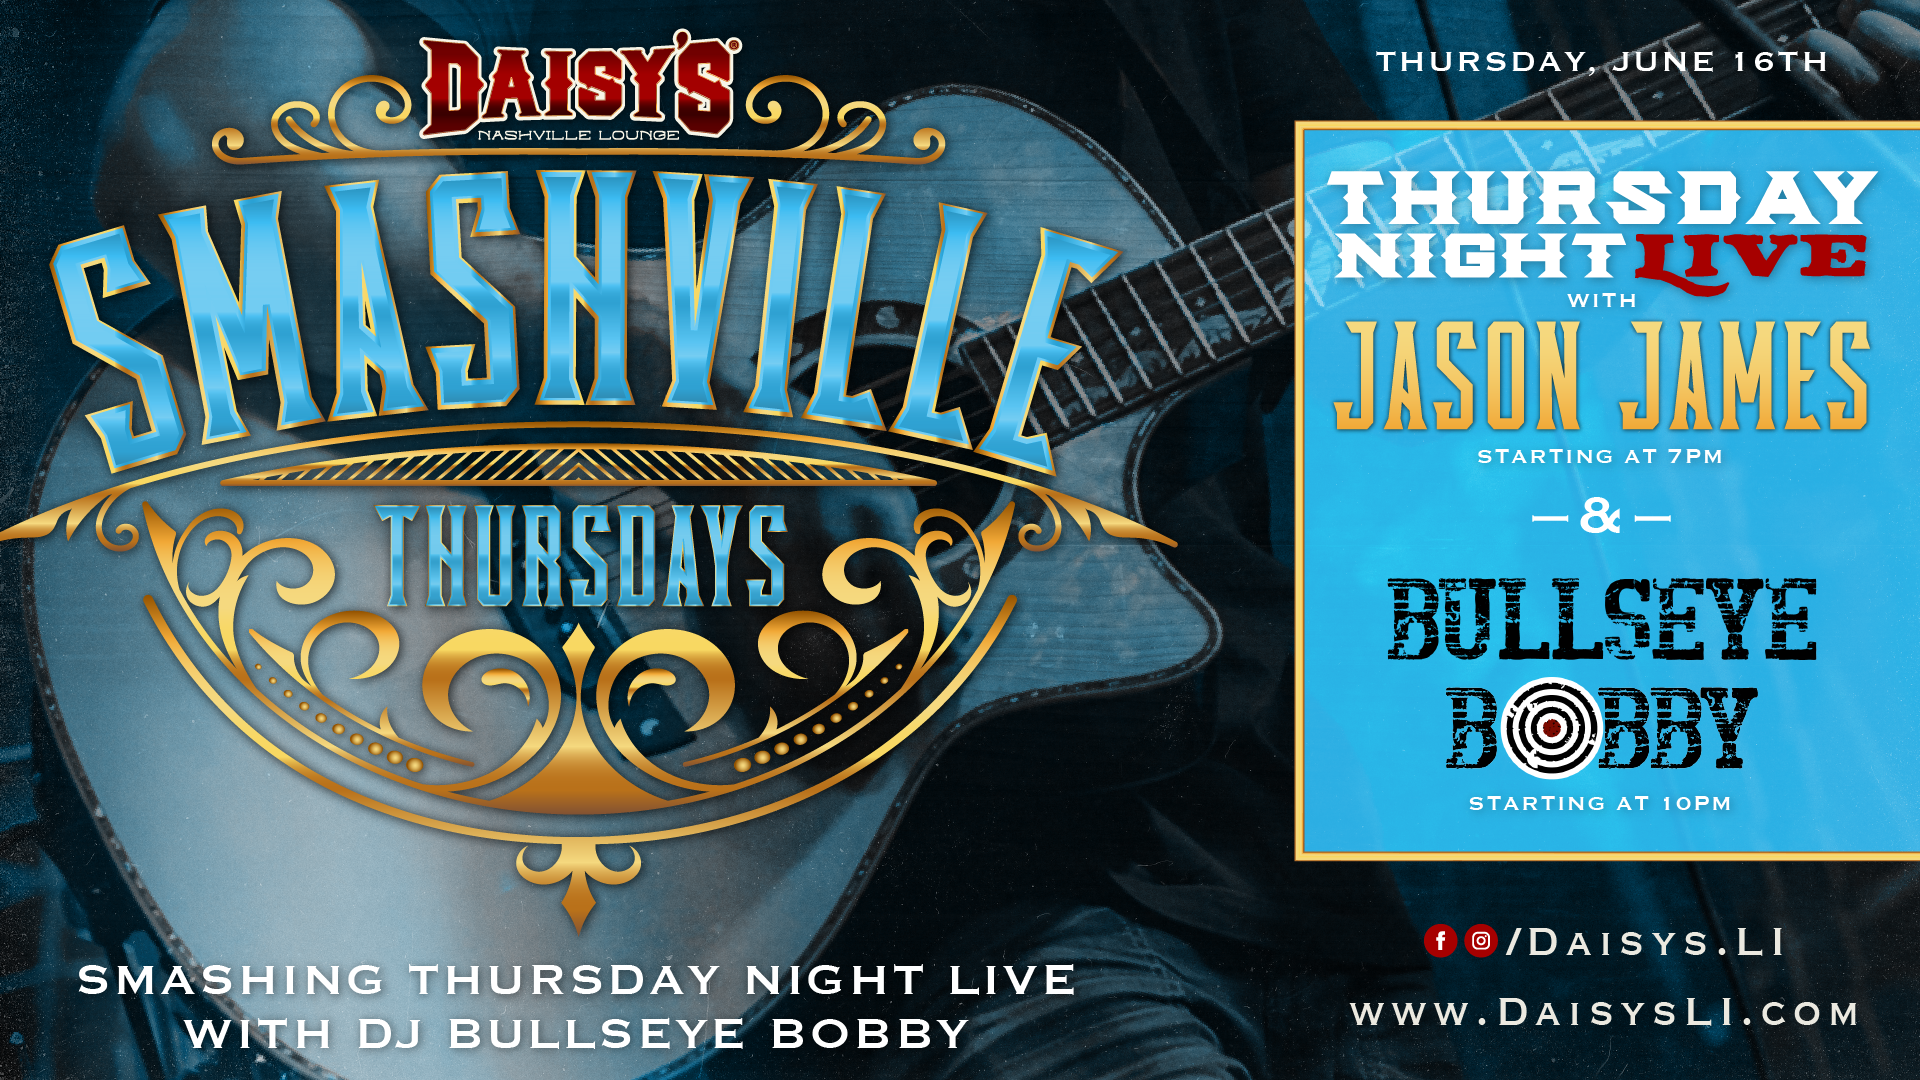 Smashville Thursday with Jason James and DJ Bullseye Bobby starting at 7 pm